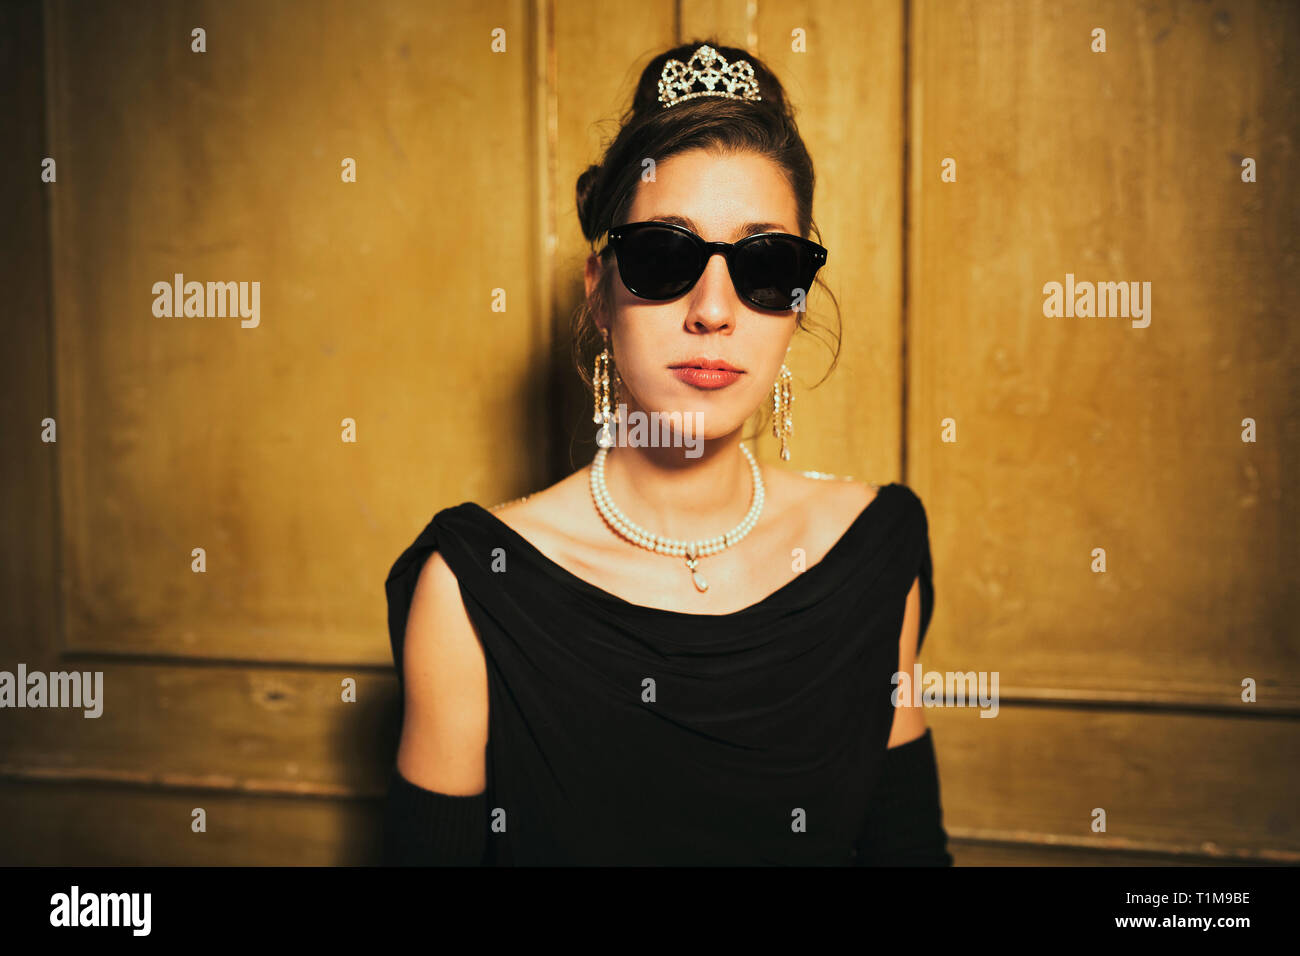 Portrait confident, cool elegant woman wearing sunglasses and tiara Stock Photo